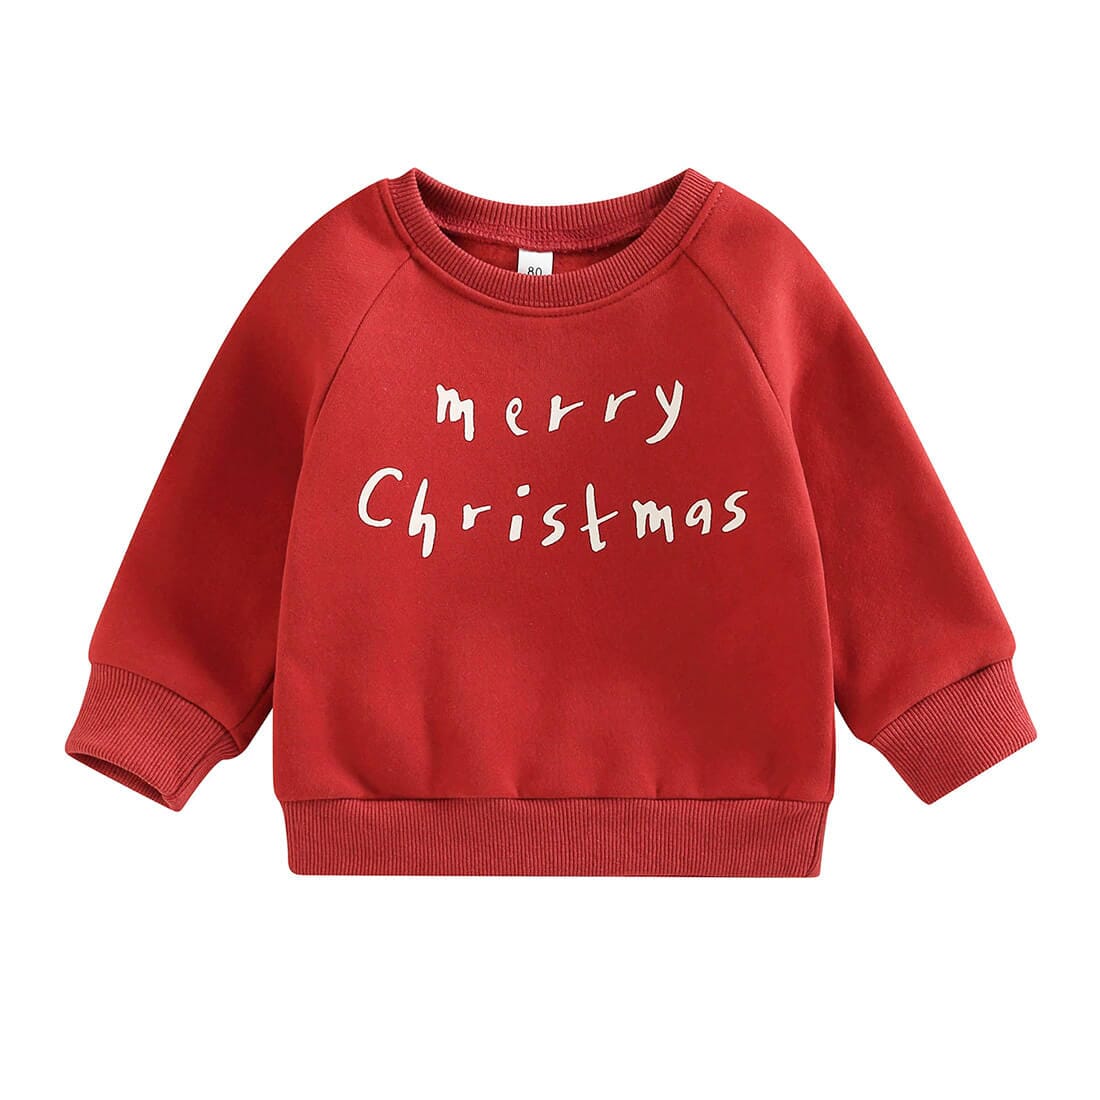 Merry Christmas Sweatshirt Red 6-9 M 